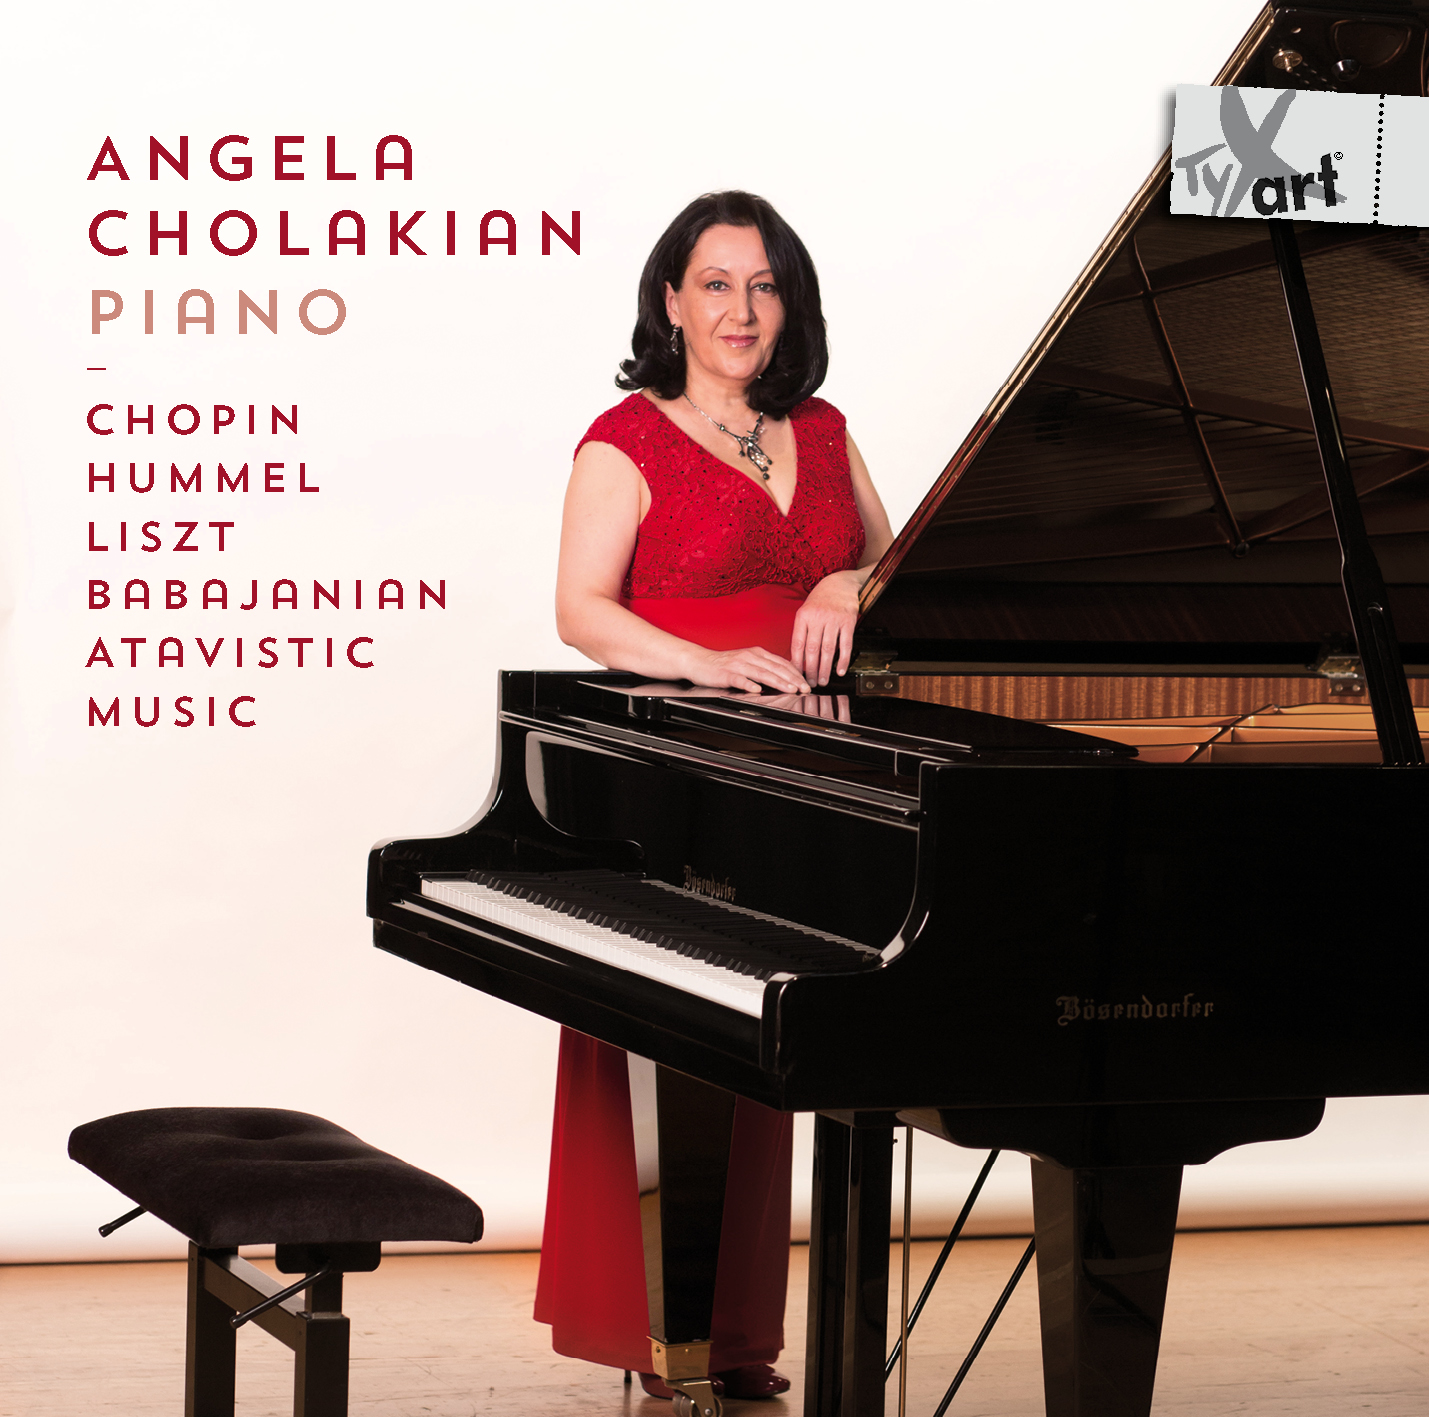 Angela Cholakian, Klavier: Chopin, Hummel, Liszt, Babajanian, Atavistic Music